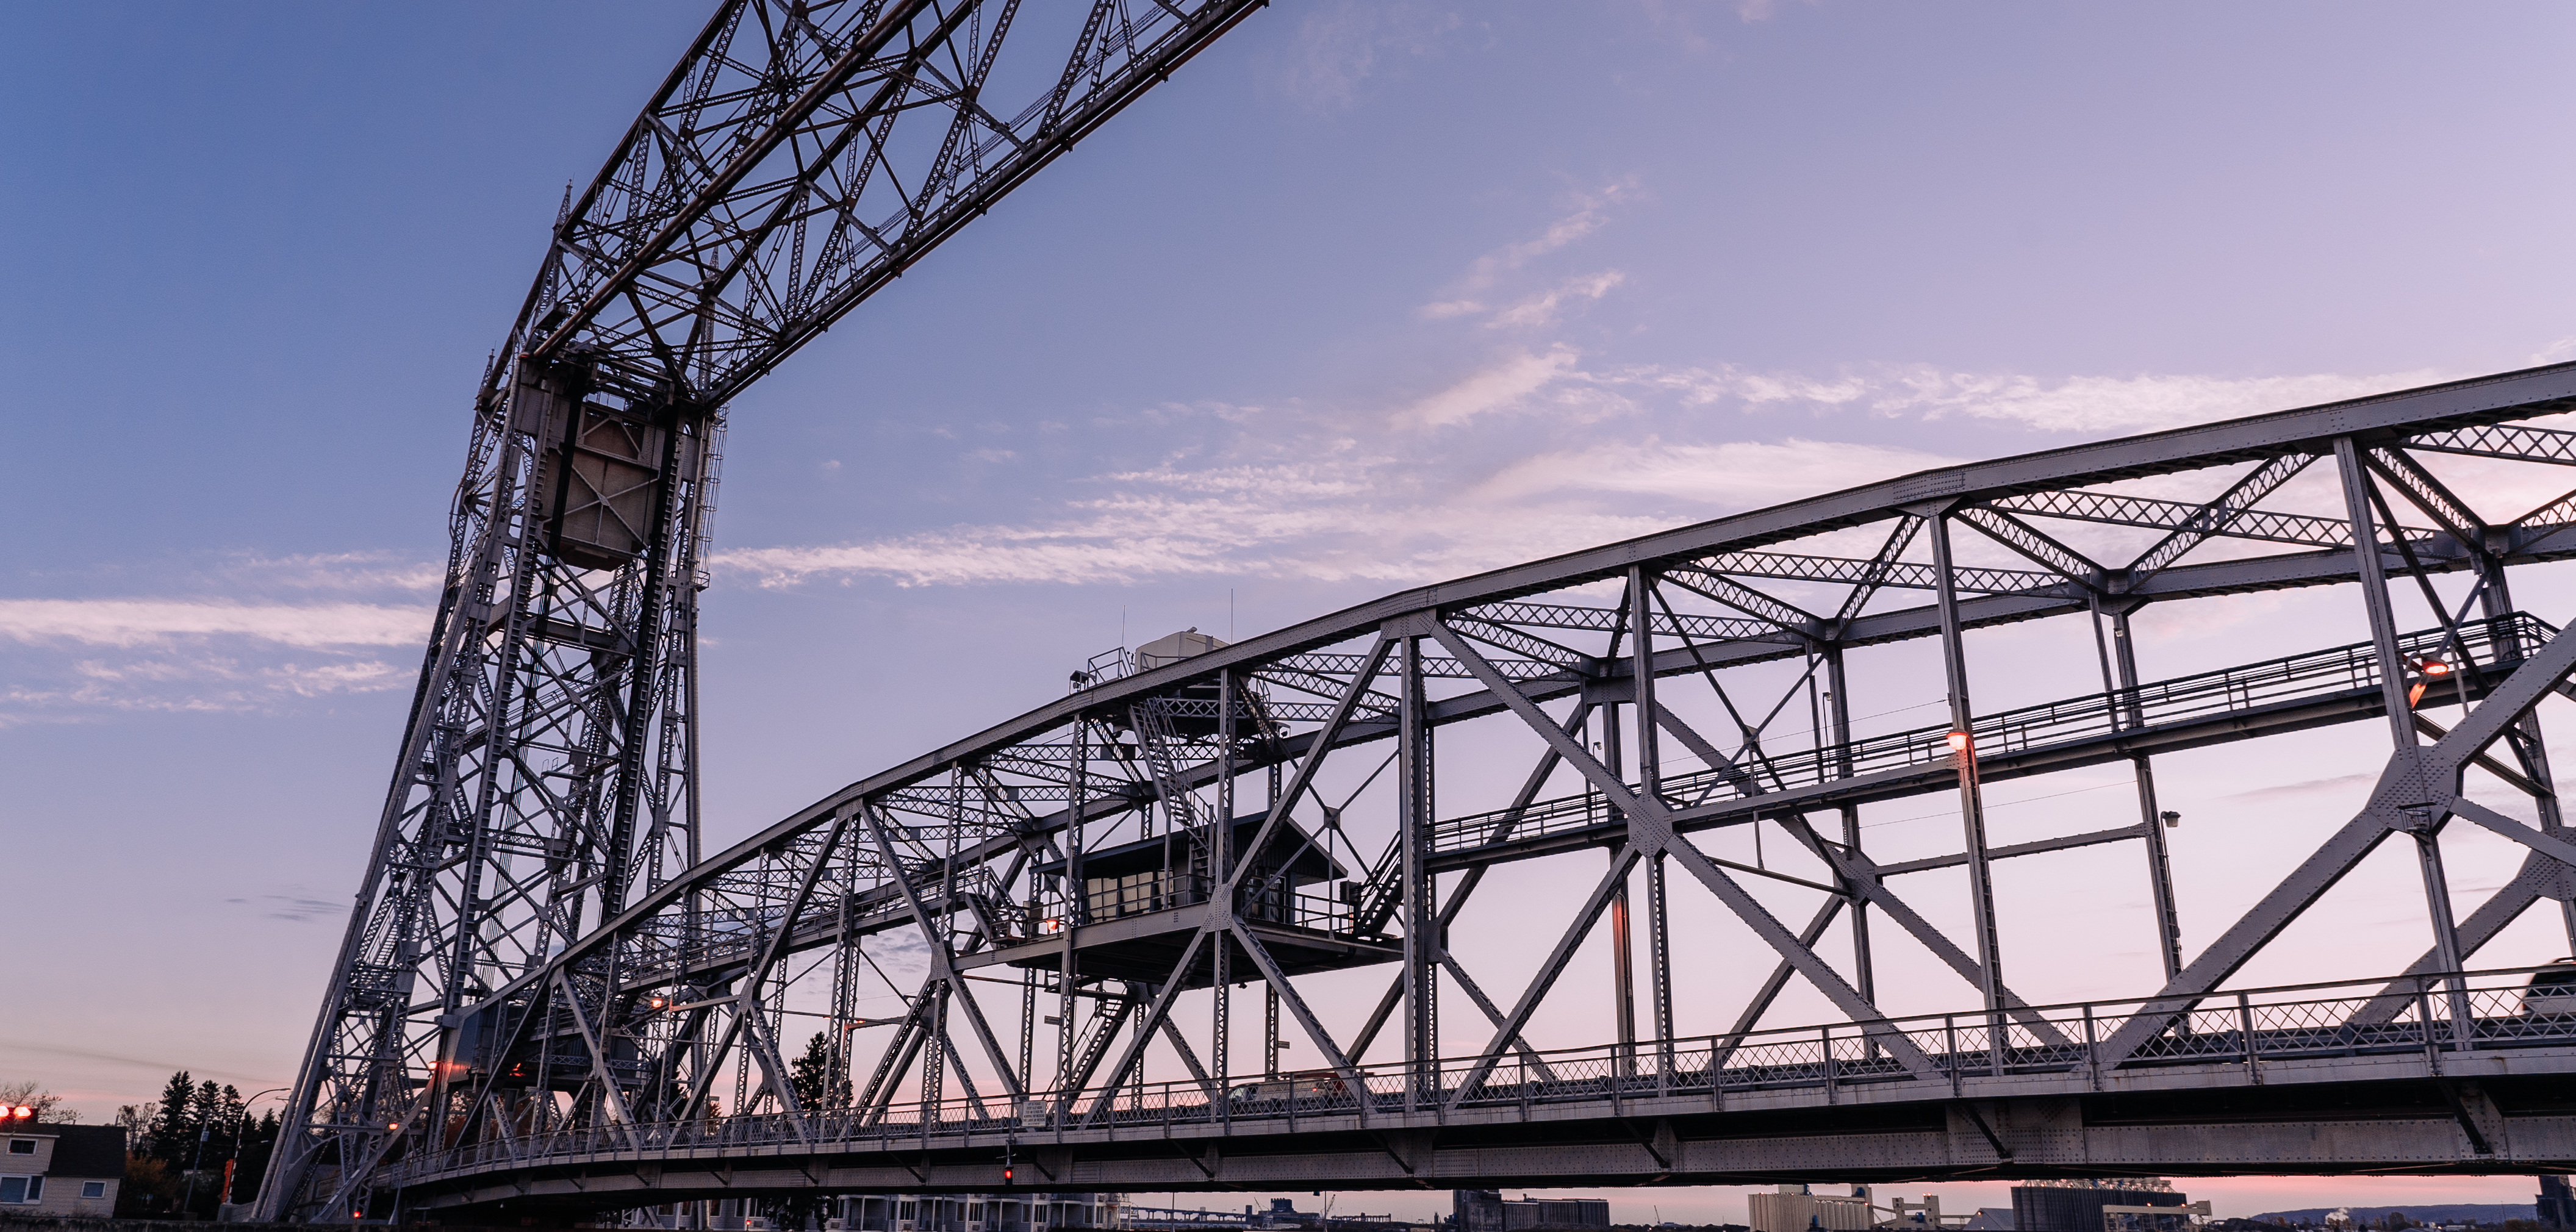 Duluth's Lift Bridge at sunset